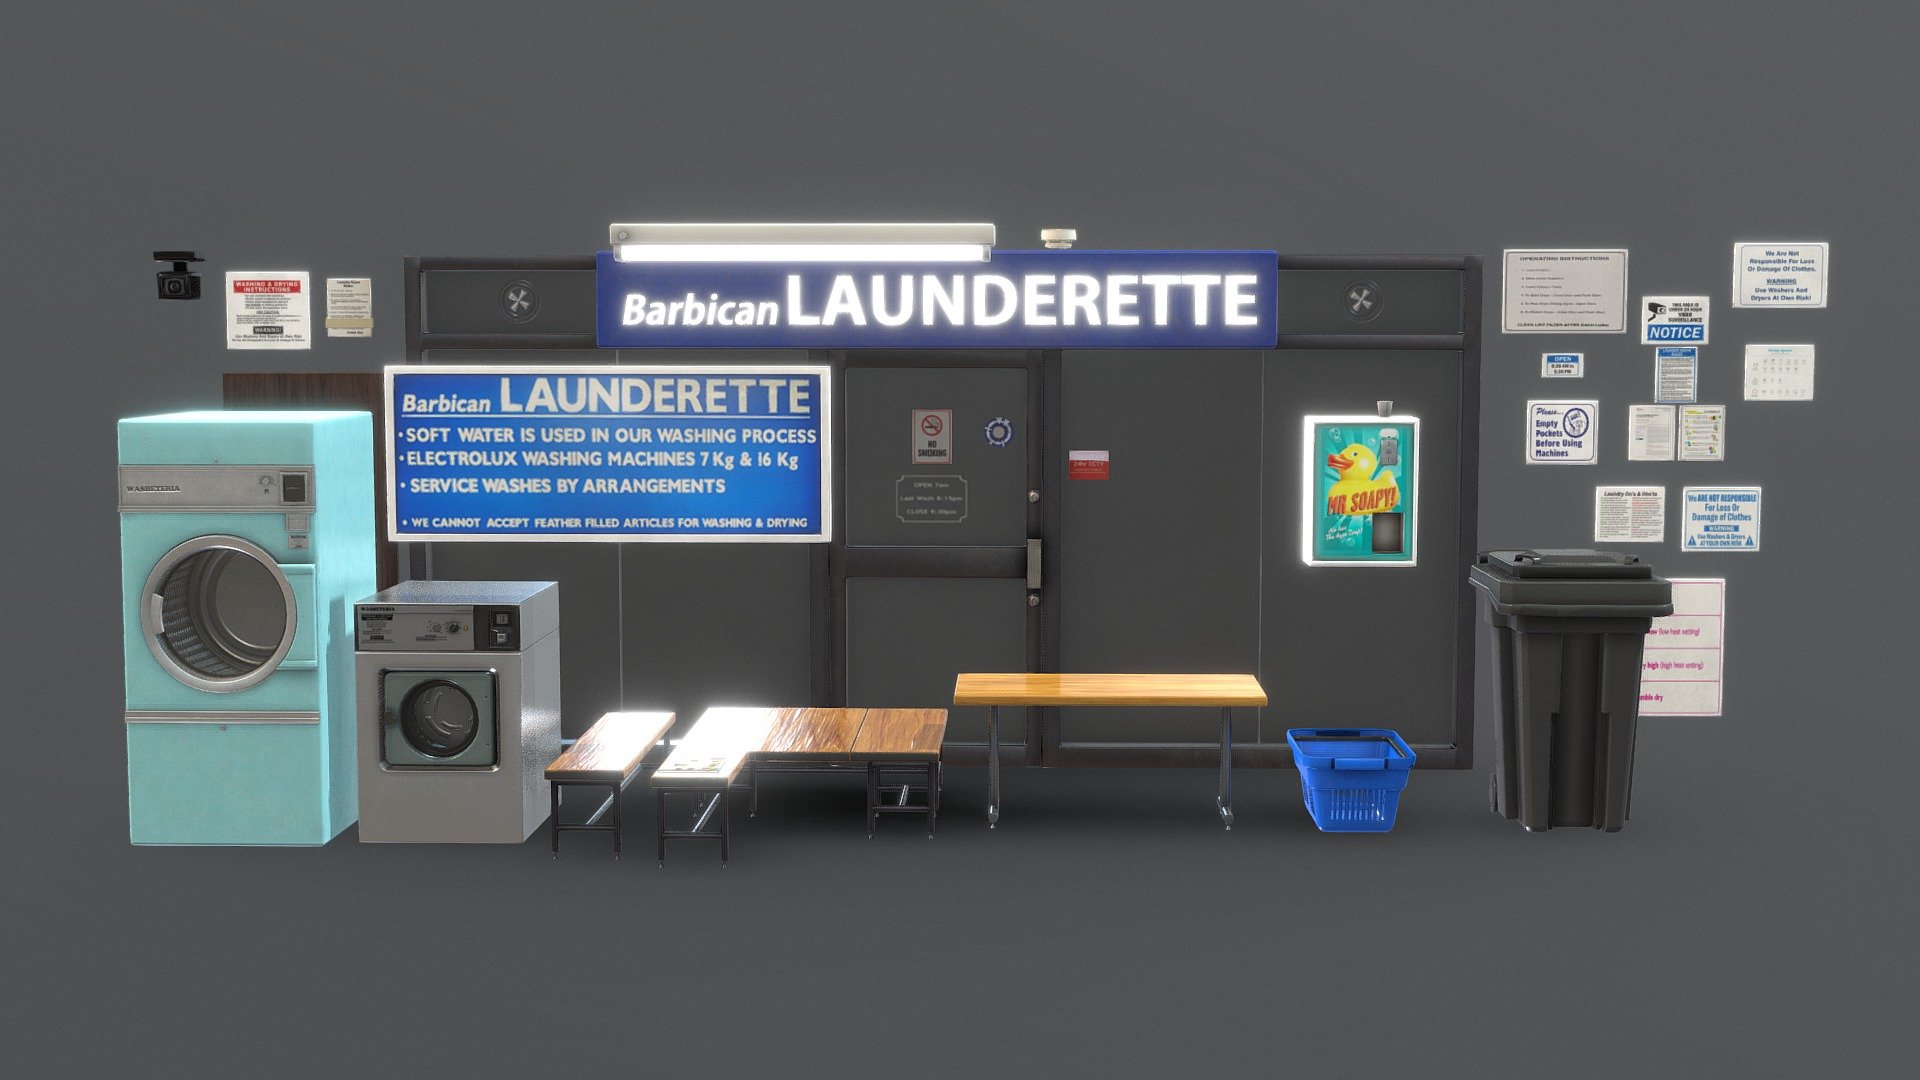 Launderette modular assets for the scene I made in UE4 - https://www.artstation.com/artwork/QzeANZ
https://vimeo.com/401650891 - Barbican Launderette - Buy Royalty Free 3D model by keith (@keithangelabacad) 3d model